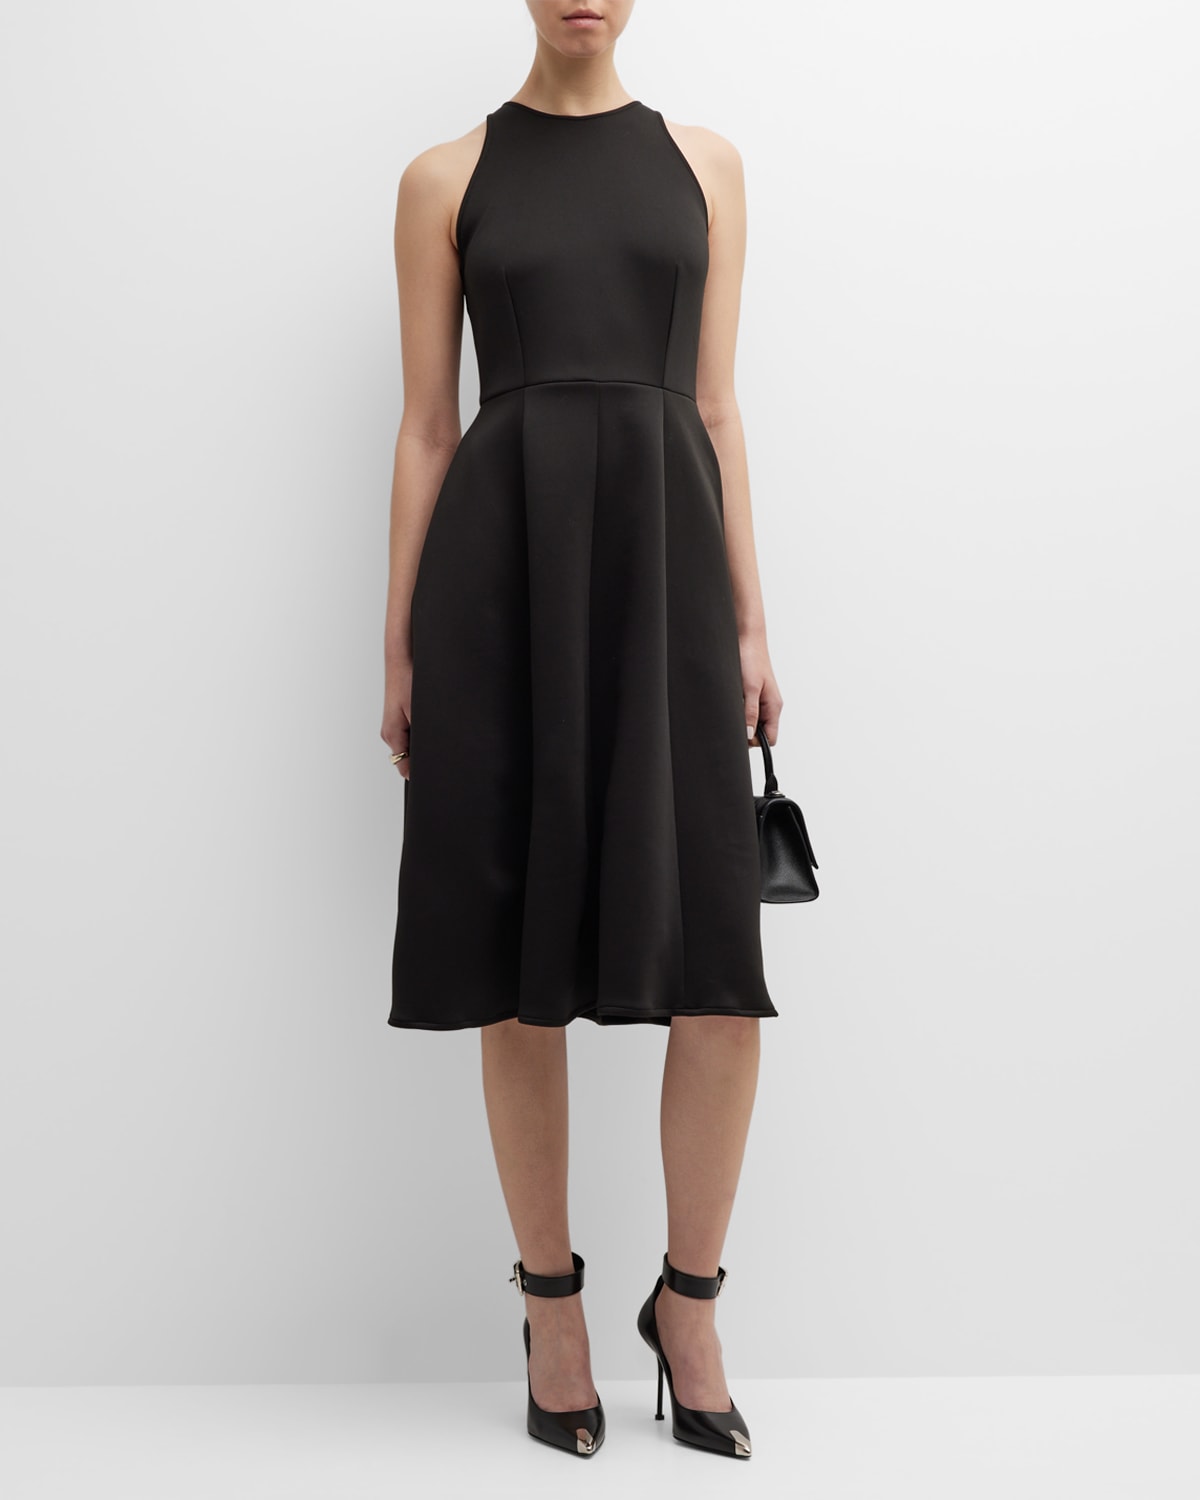 ARIAS New York Sleeveless A-Line Midi Dress